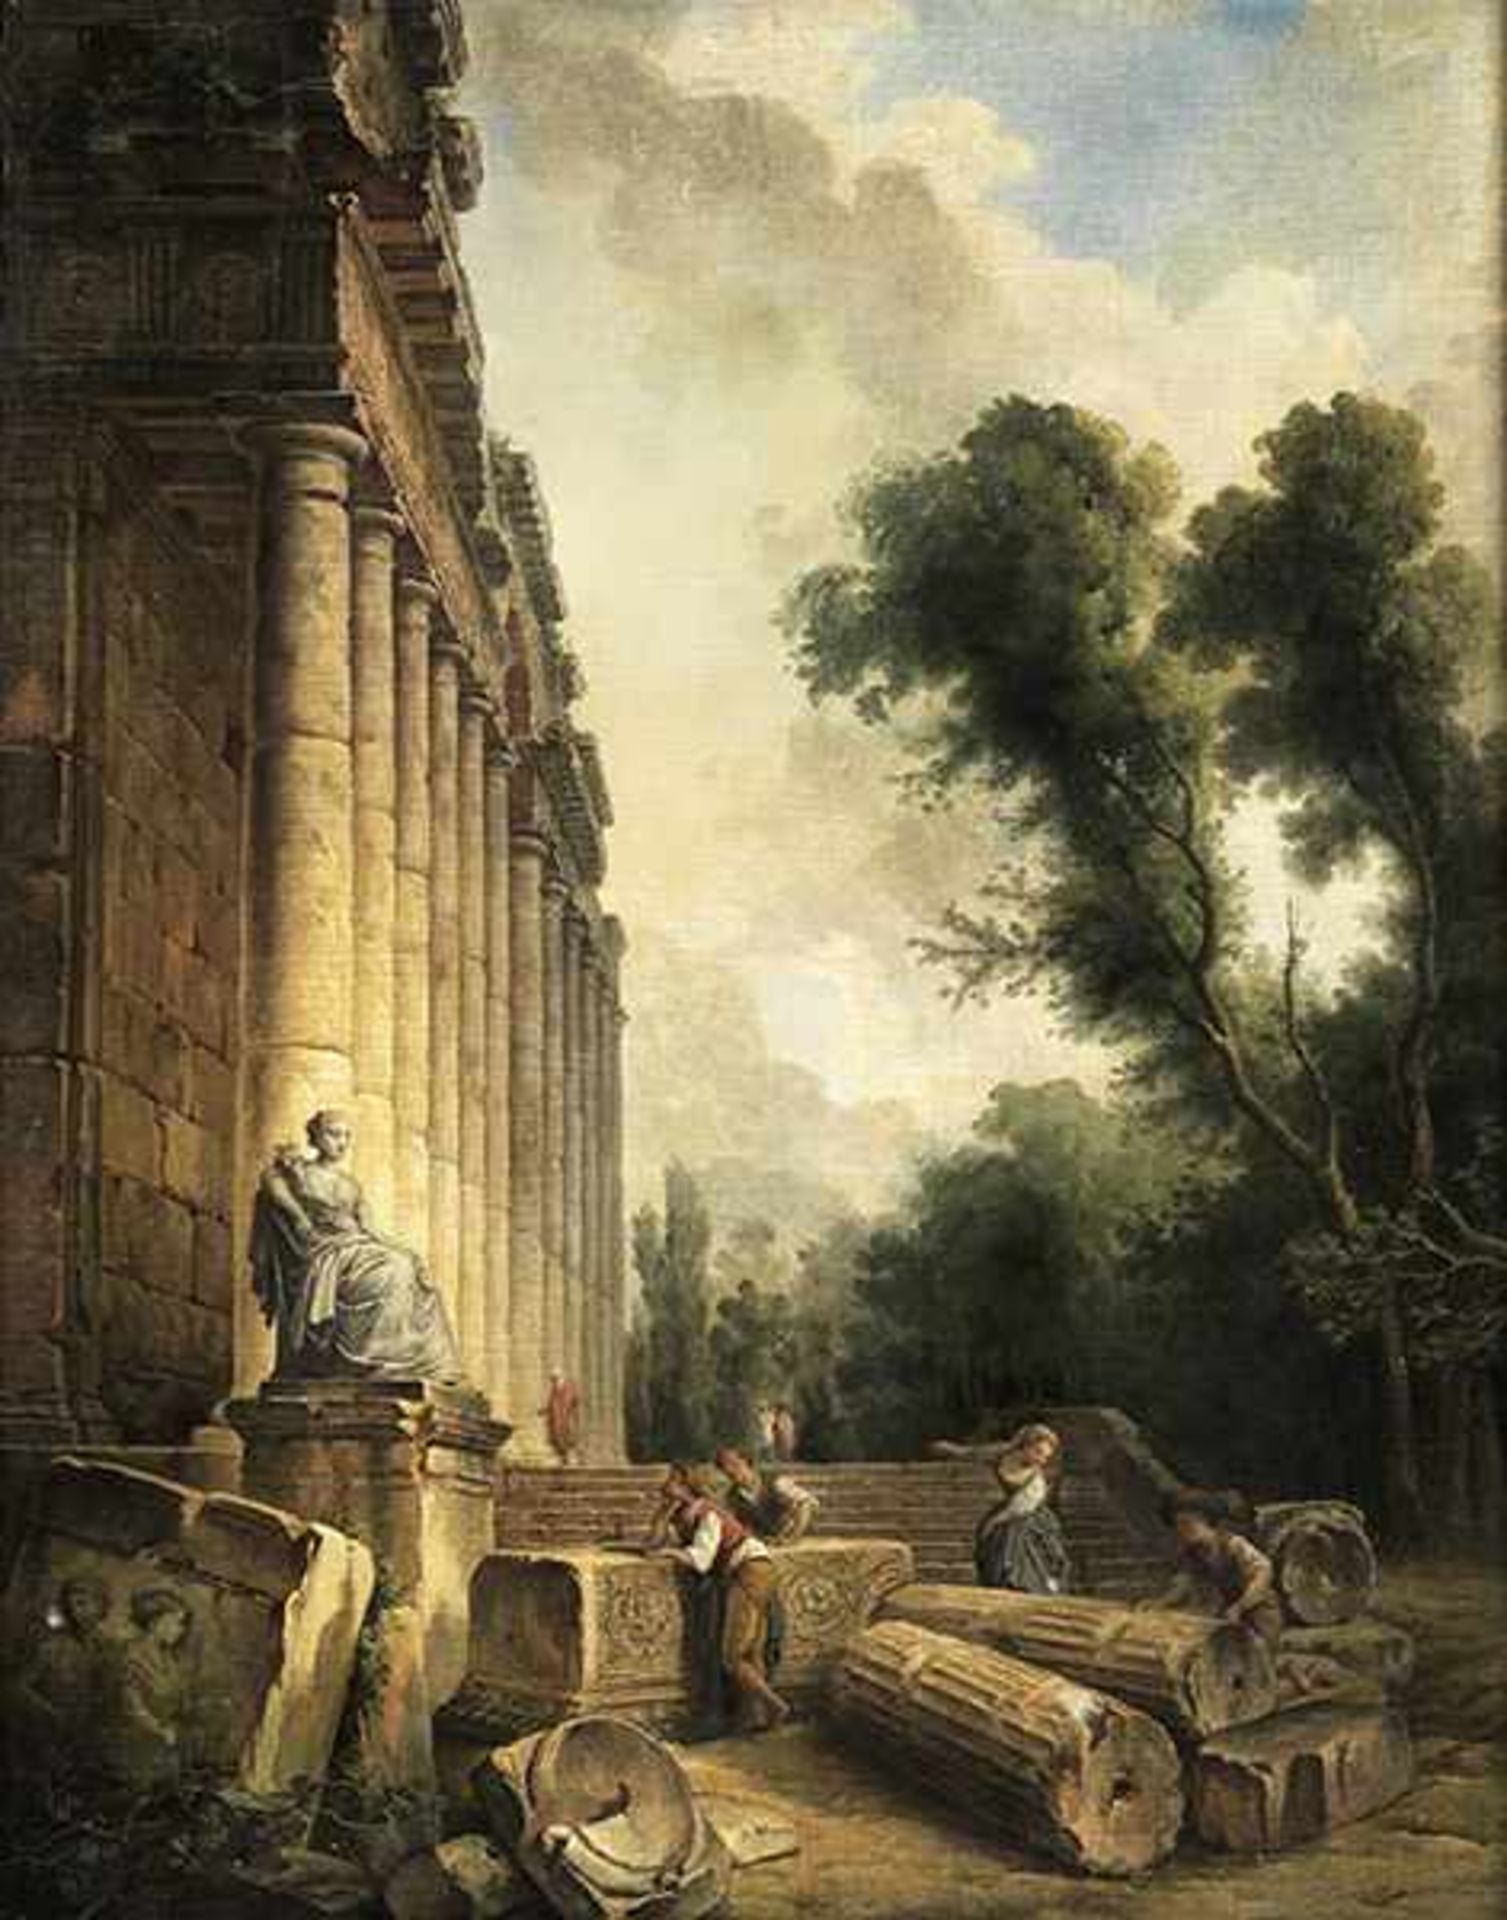 18th century painter